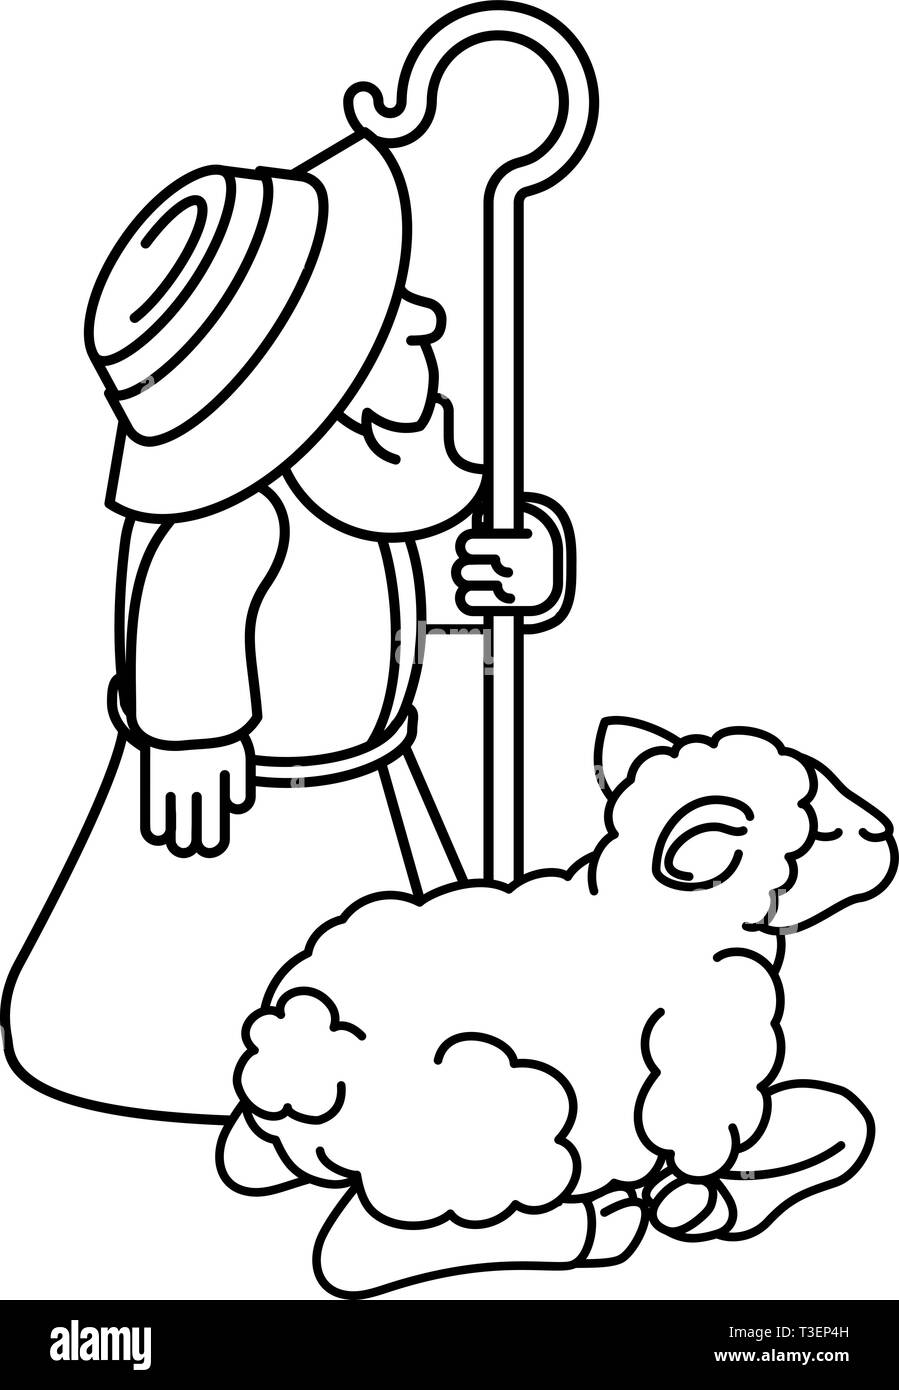 Cartoon Traditional Shepherd and Sheep or Lamb Stock Vector